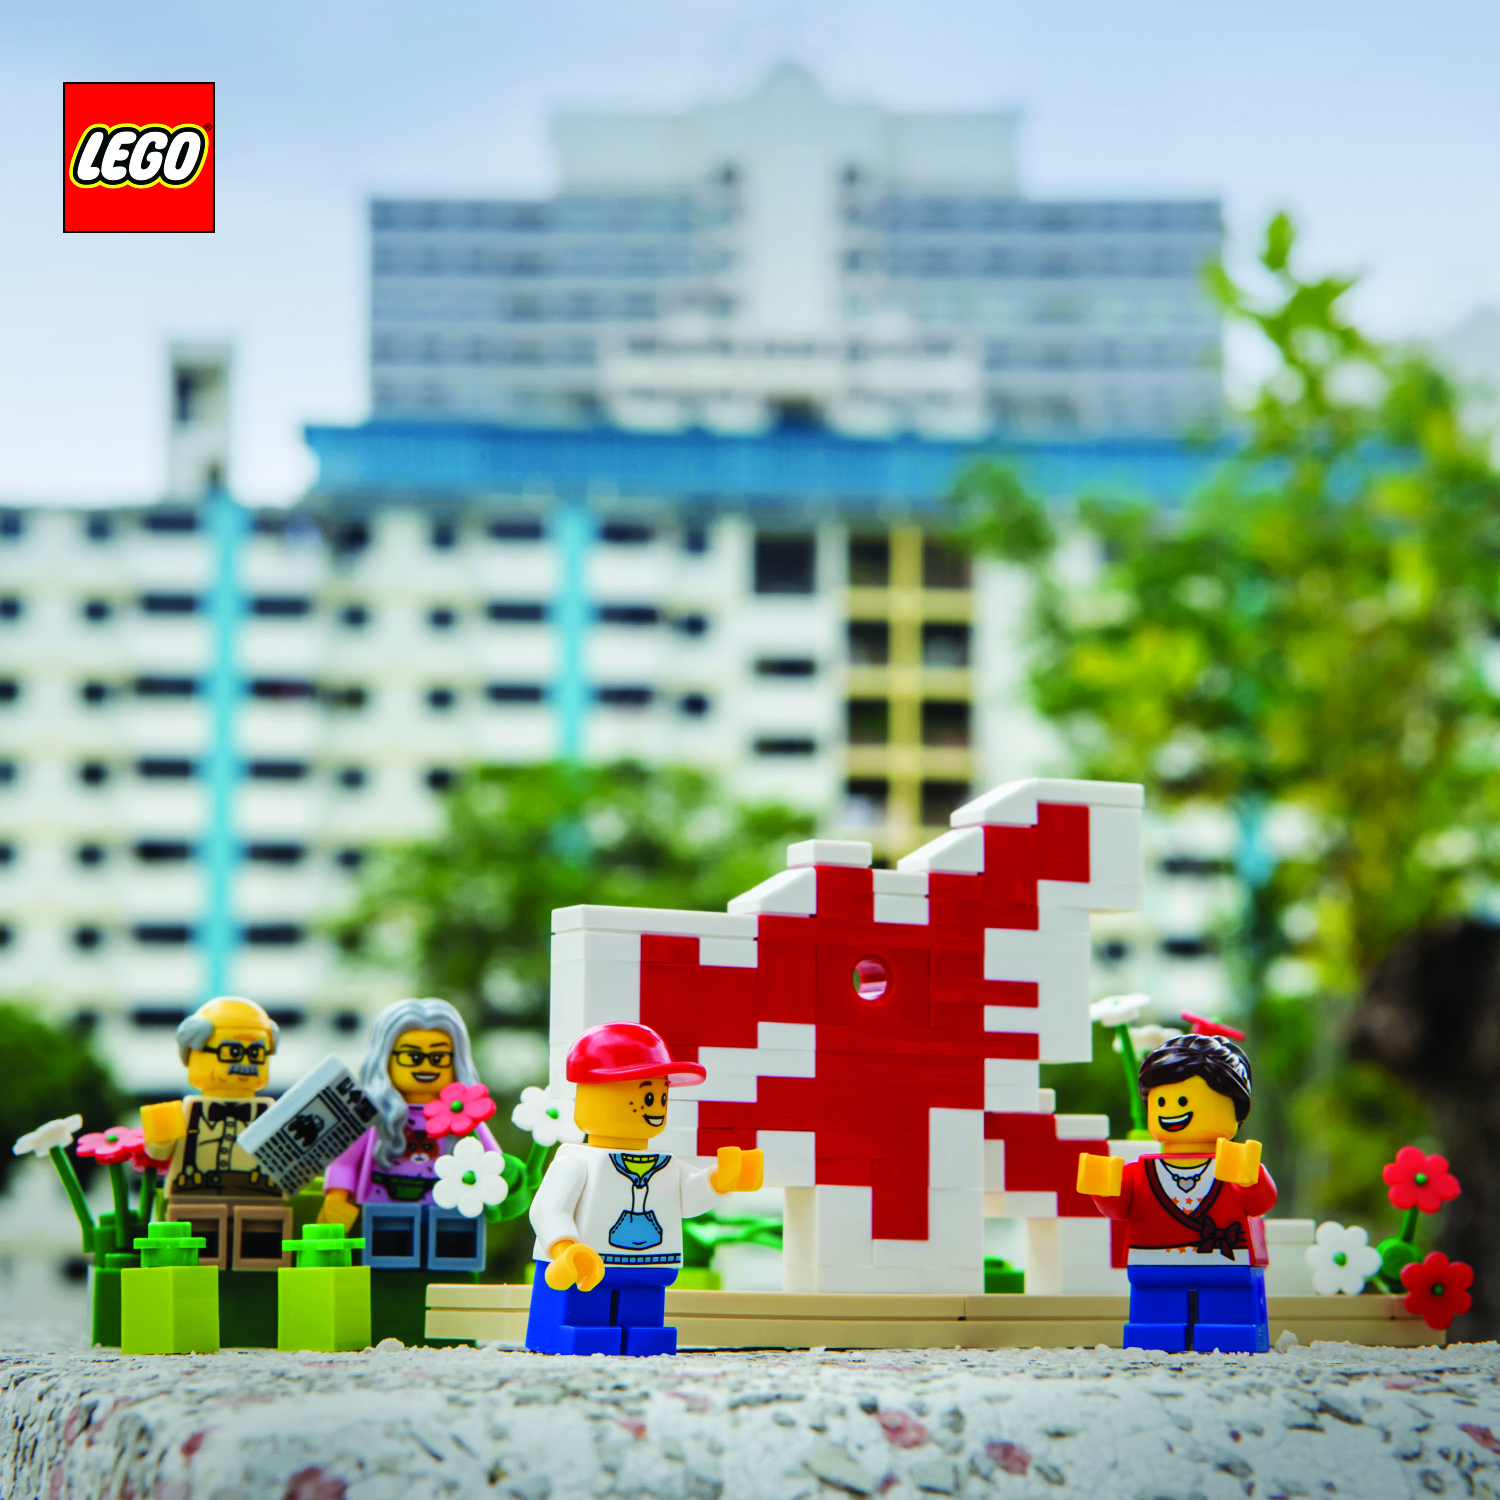 Rebuild Singapore Memories With Lego Singapore